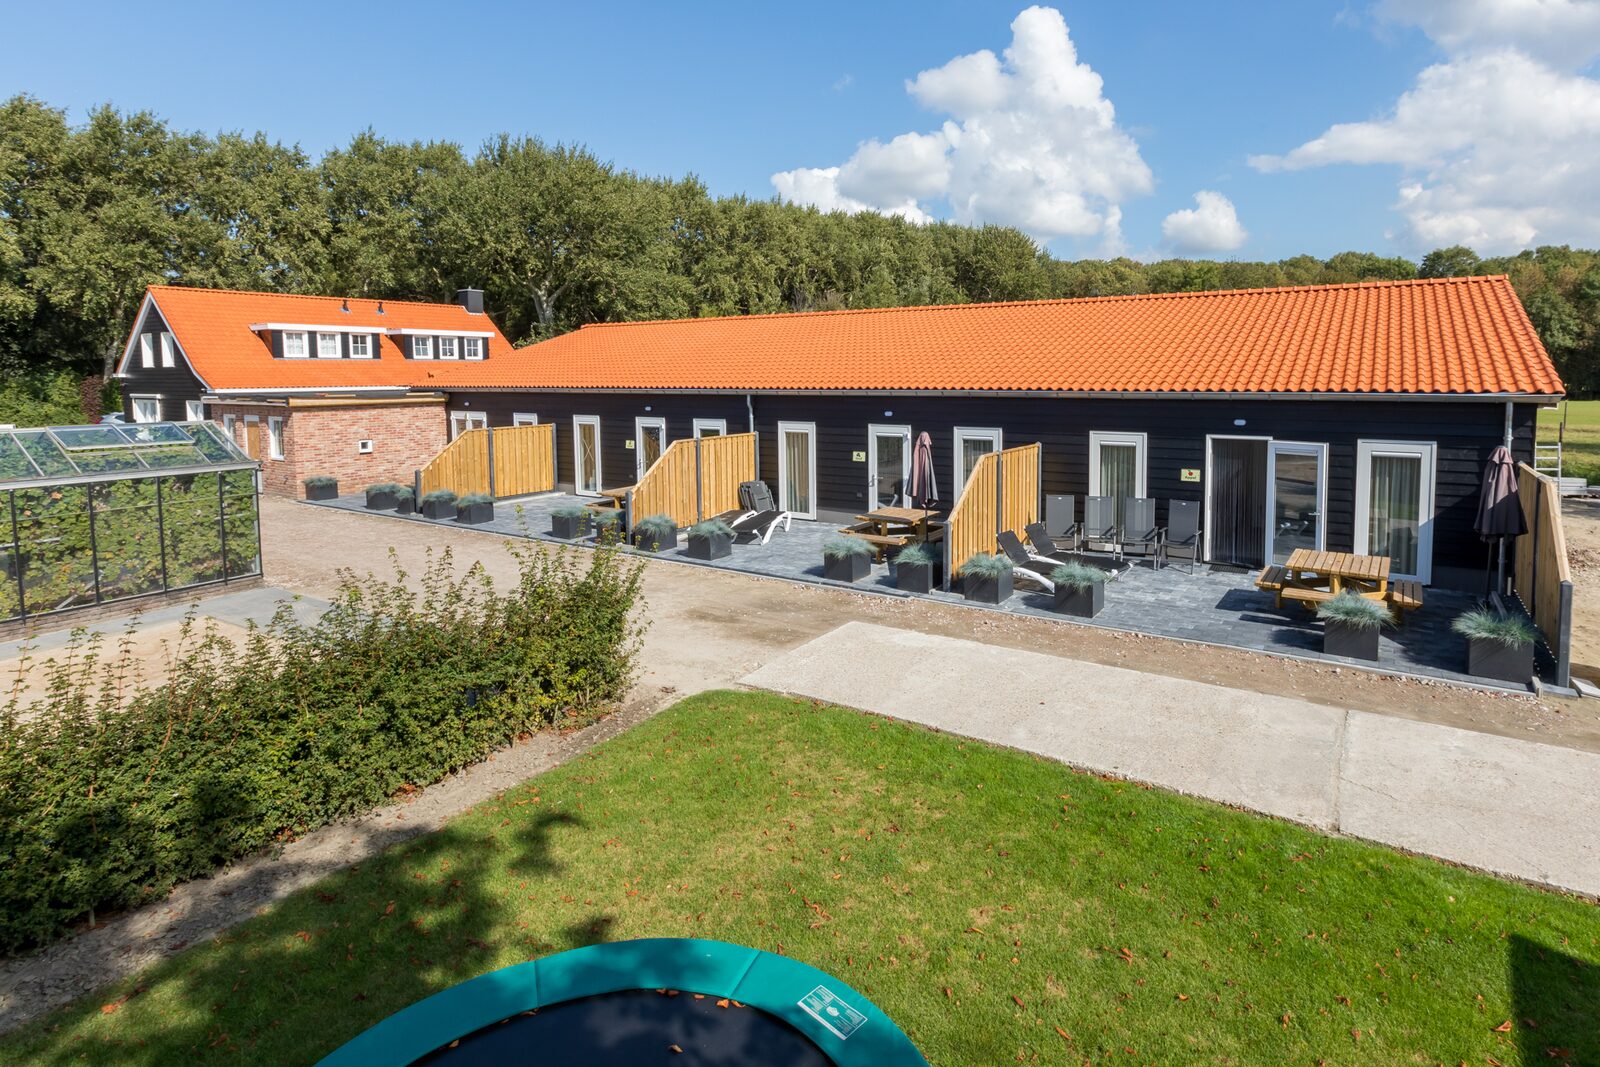 Zeldenrust Farm - Holiday Lodges in Oostkapelle, Zeeland, Netherlands